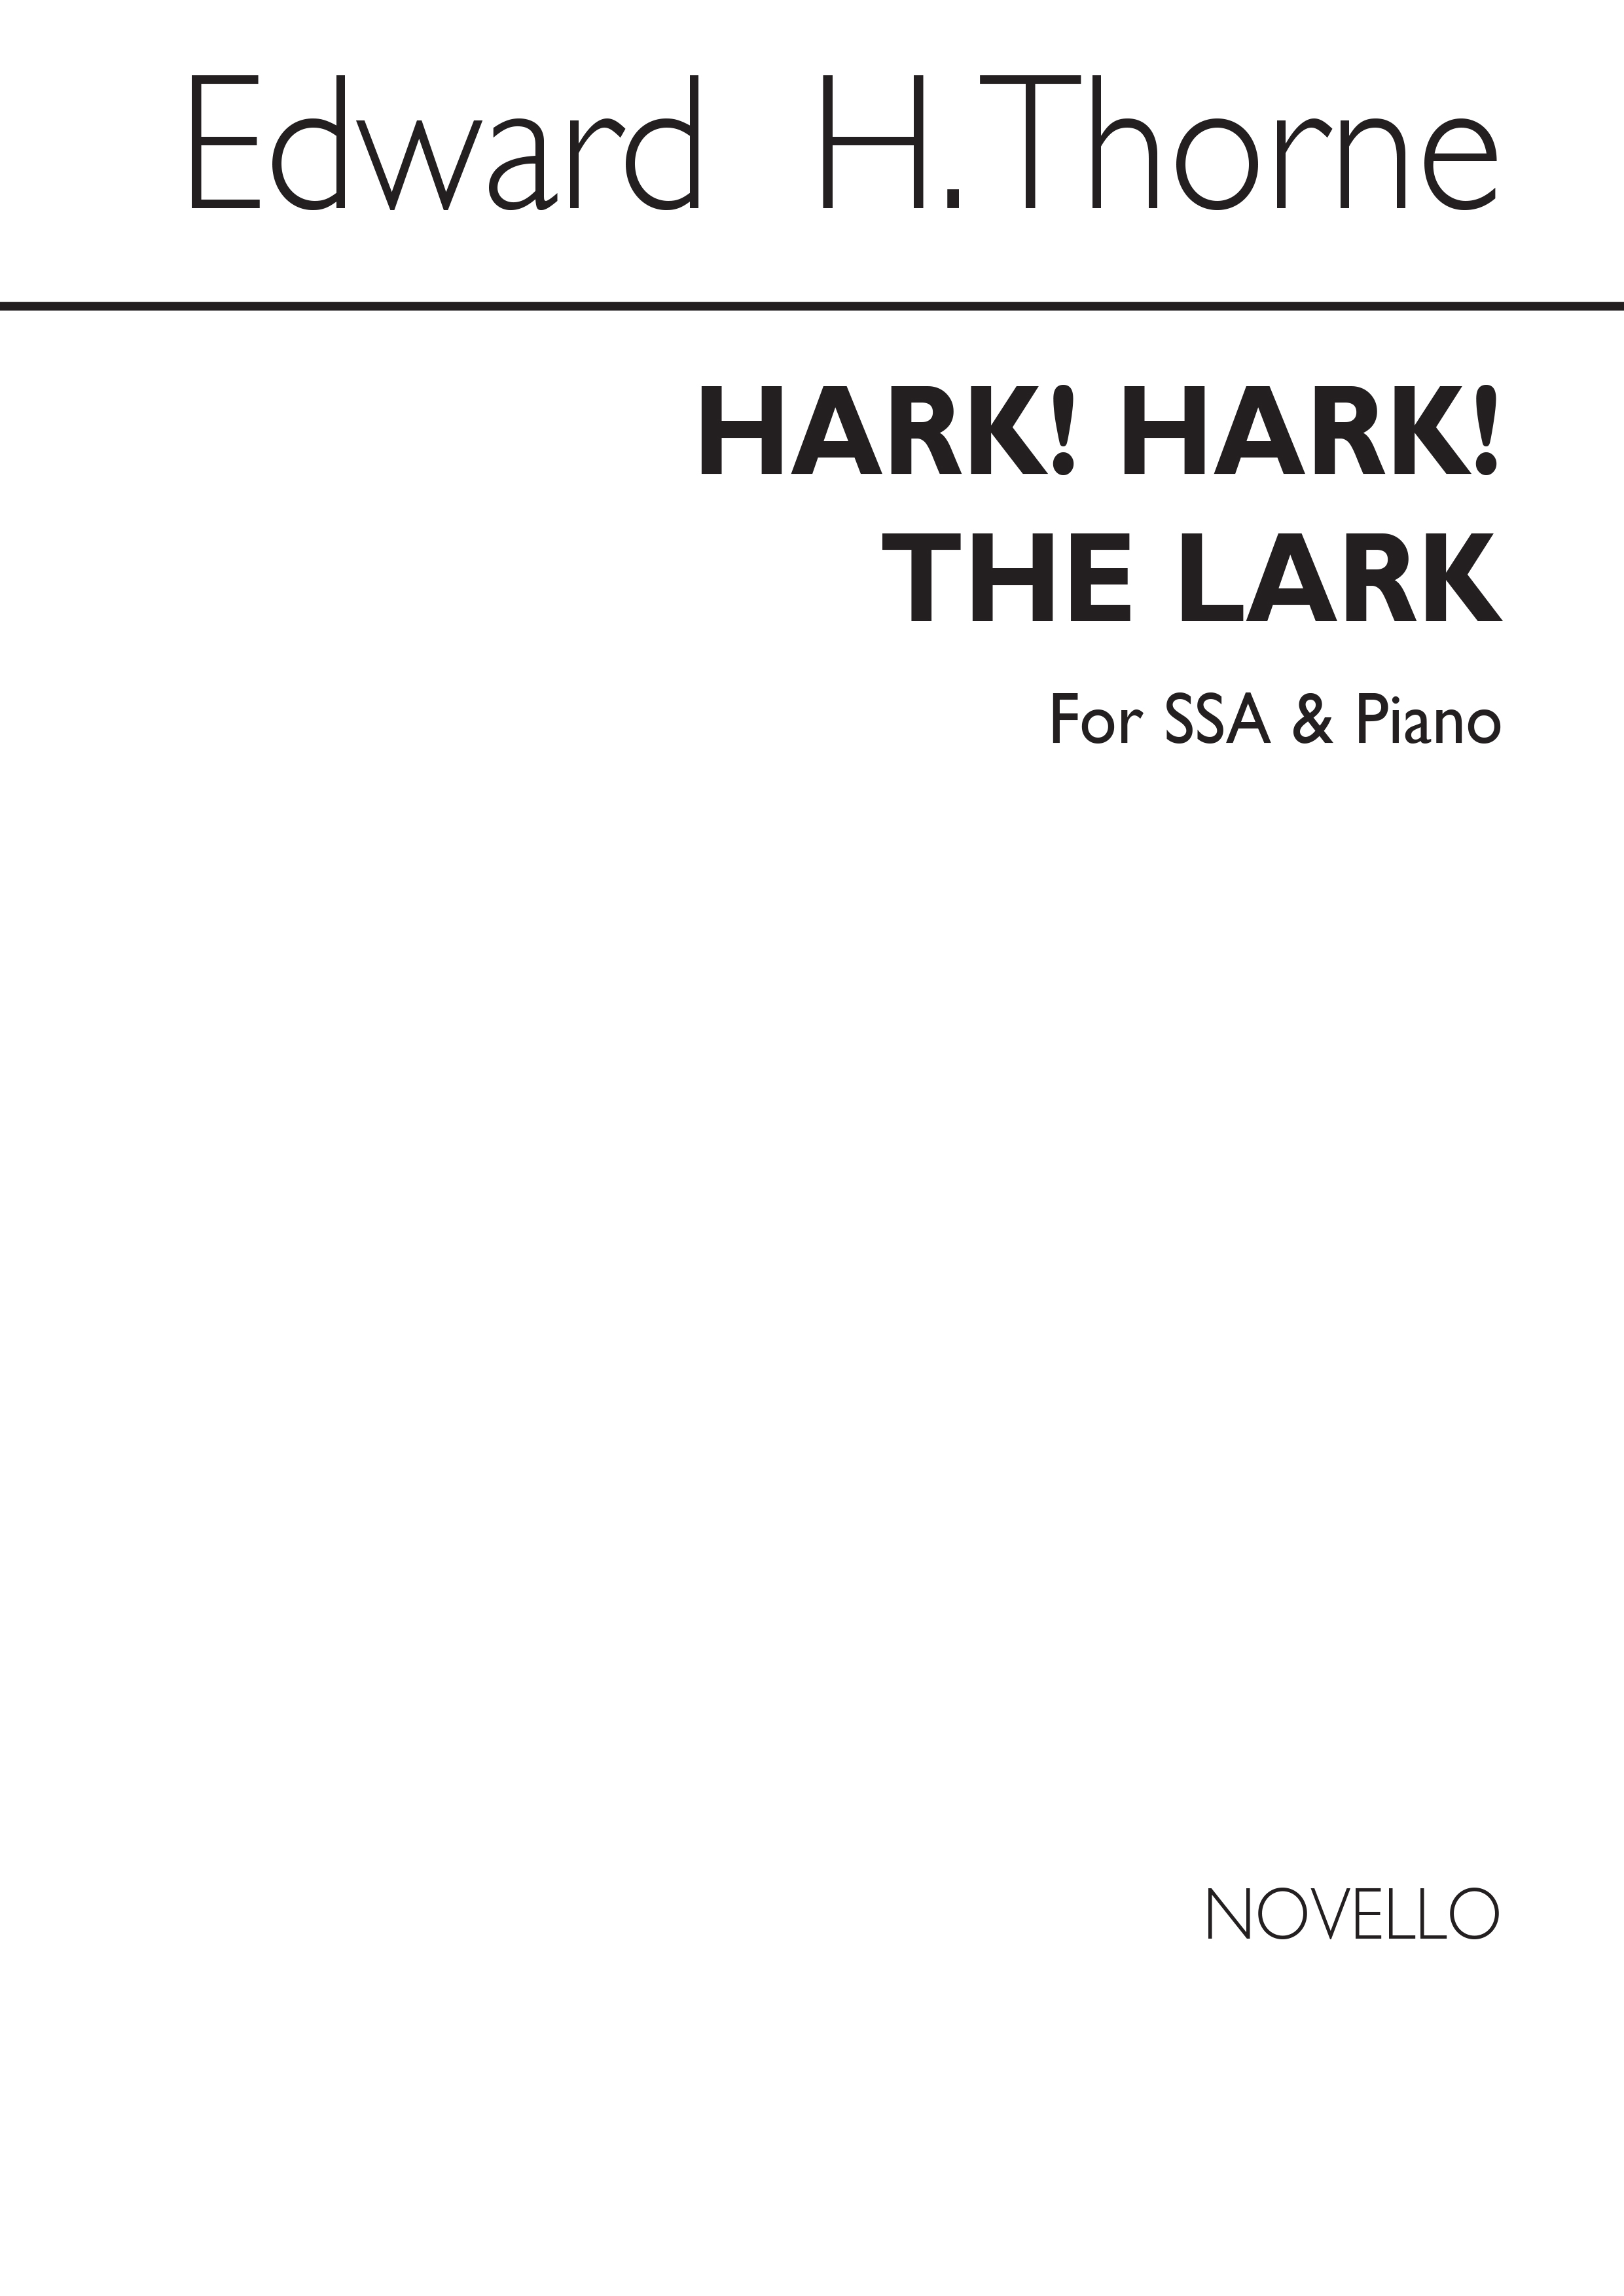 Edward H. Thorne: Hark! Hark! The Lark Ssa/Piano